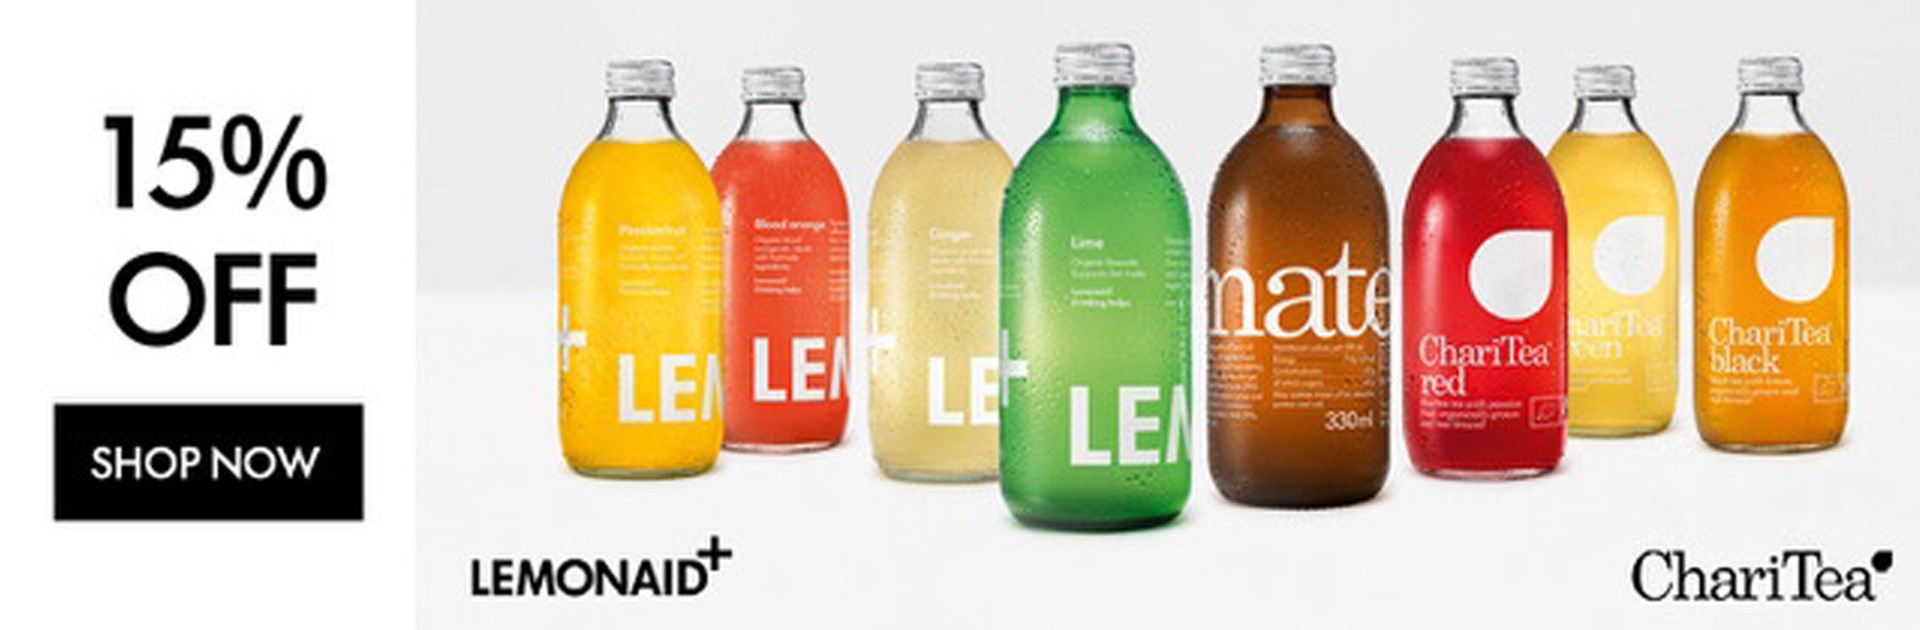 /branded-goods/soft-drinks.html?manufacturer=lemonaid-beverages&promo_name=lemonaid&promo_id=2022-05-06&promo_creative=cat-banner&promo_position=2022-05-06-cat